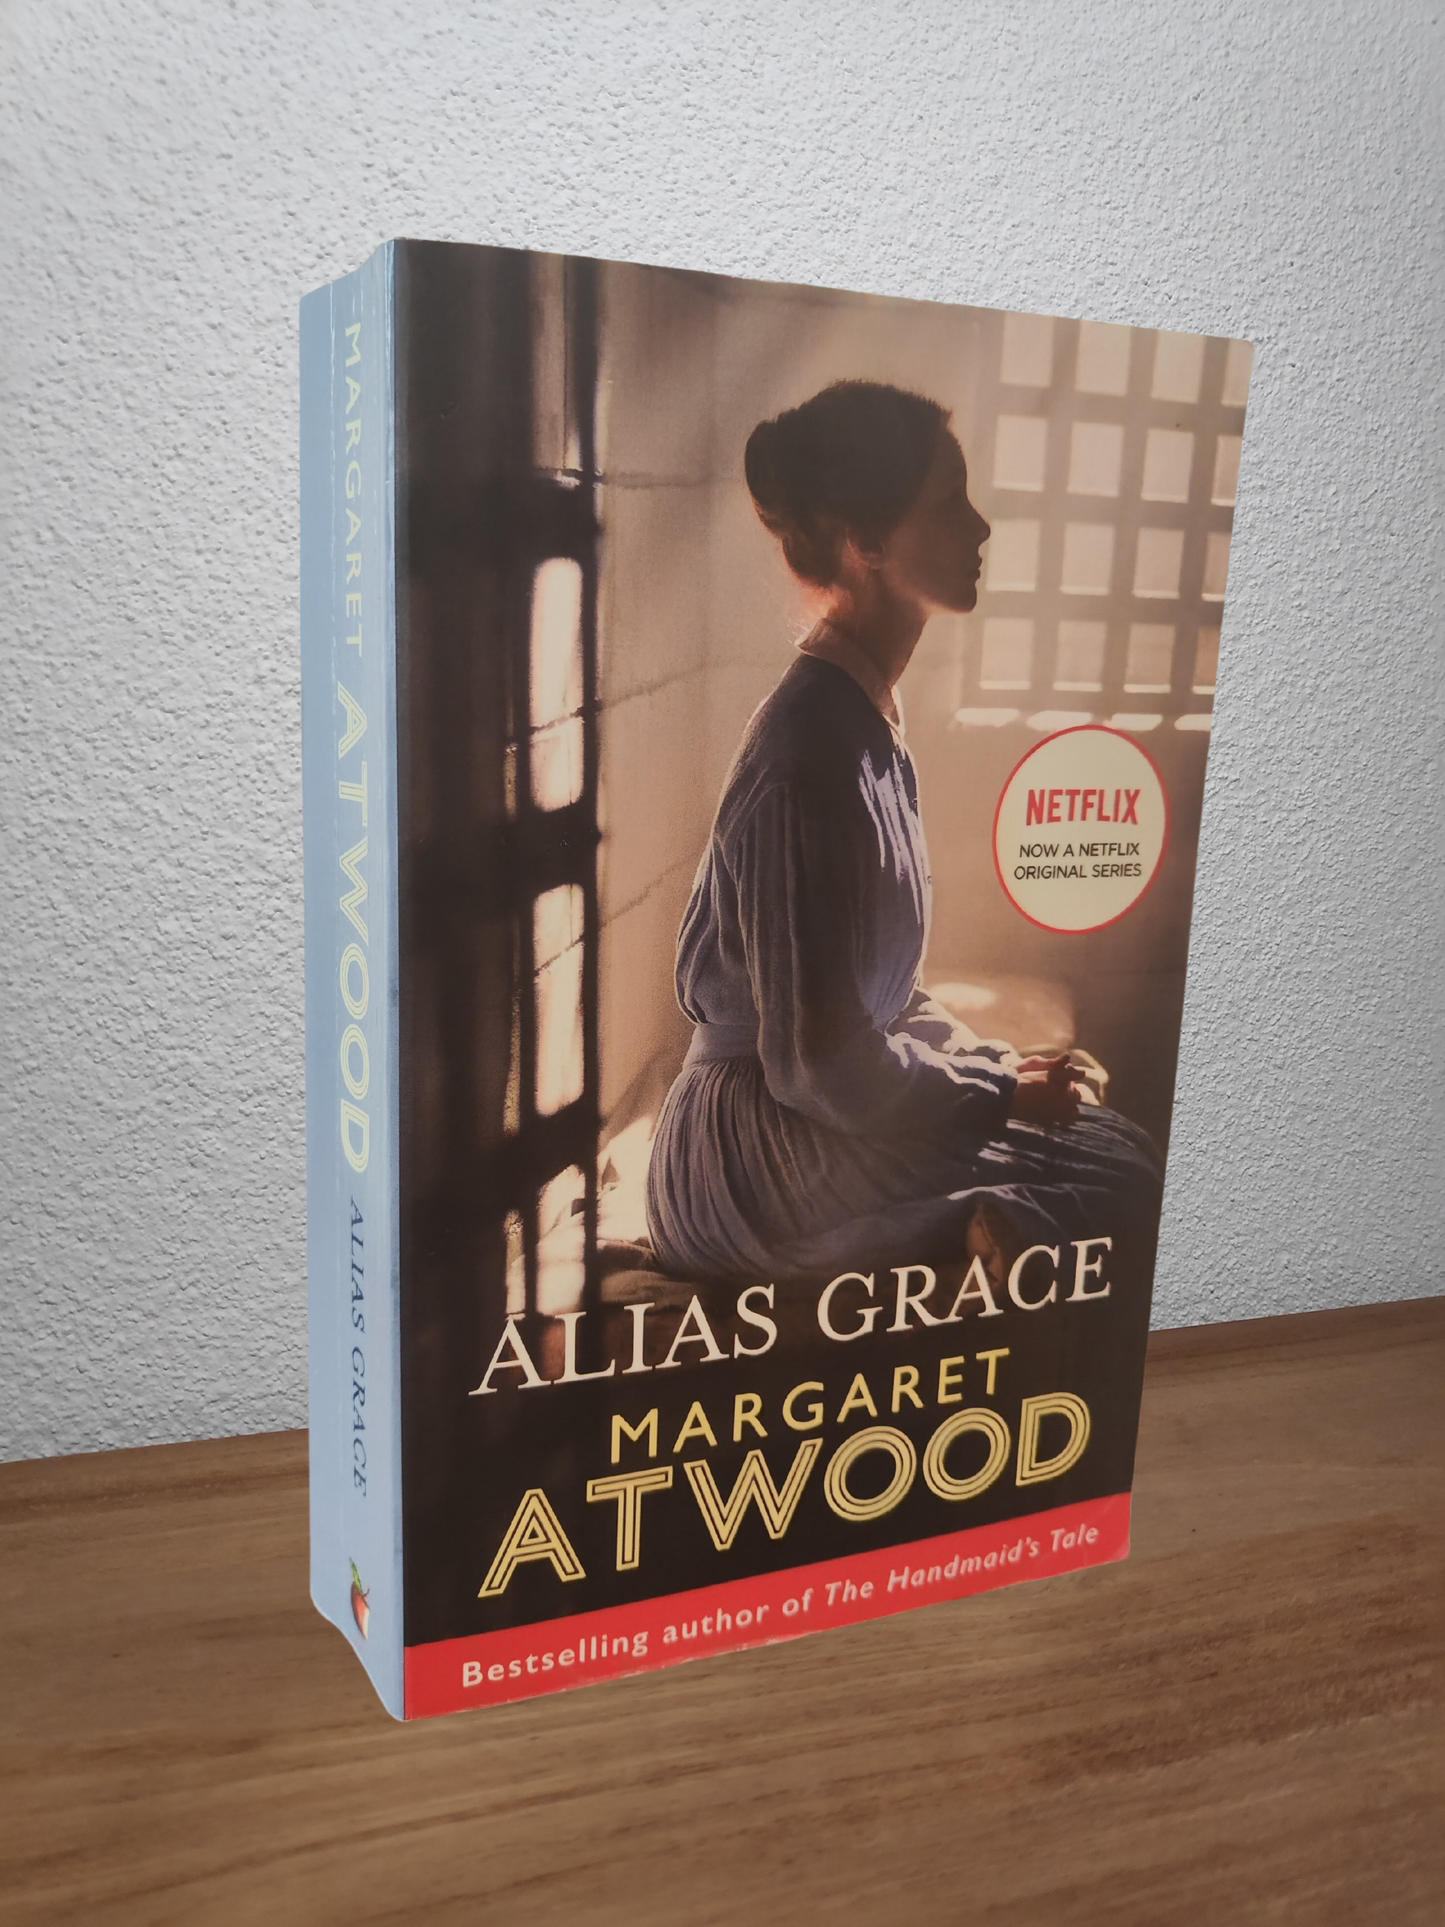 Margaret Atwood - Alias Grace